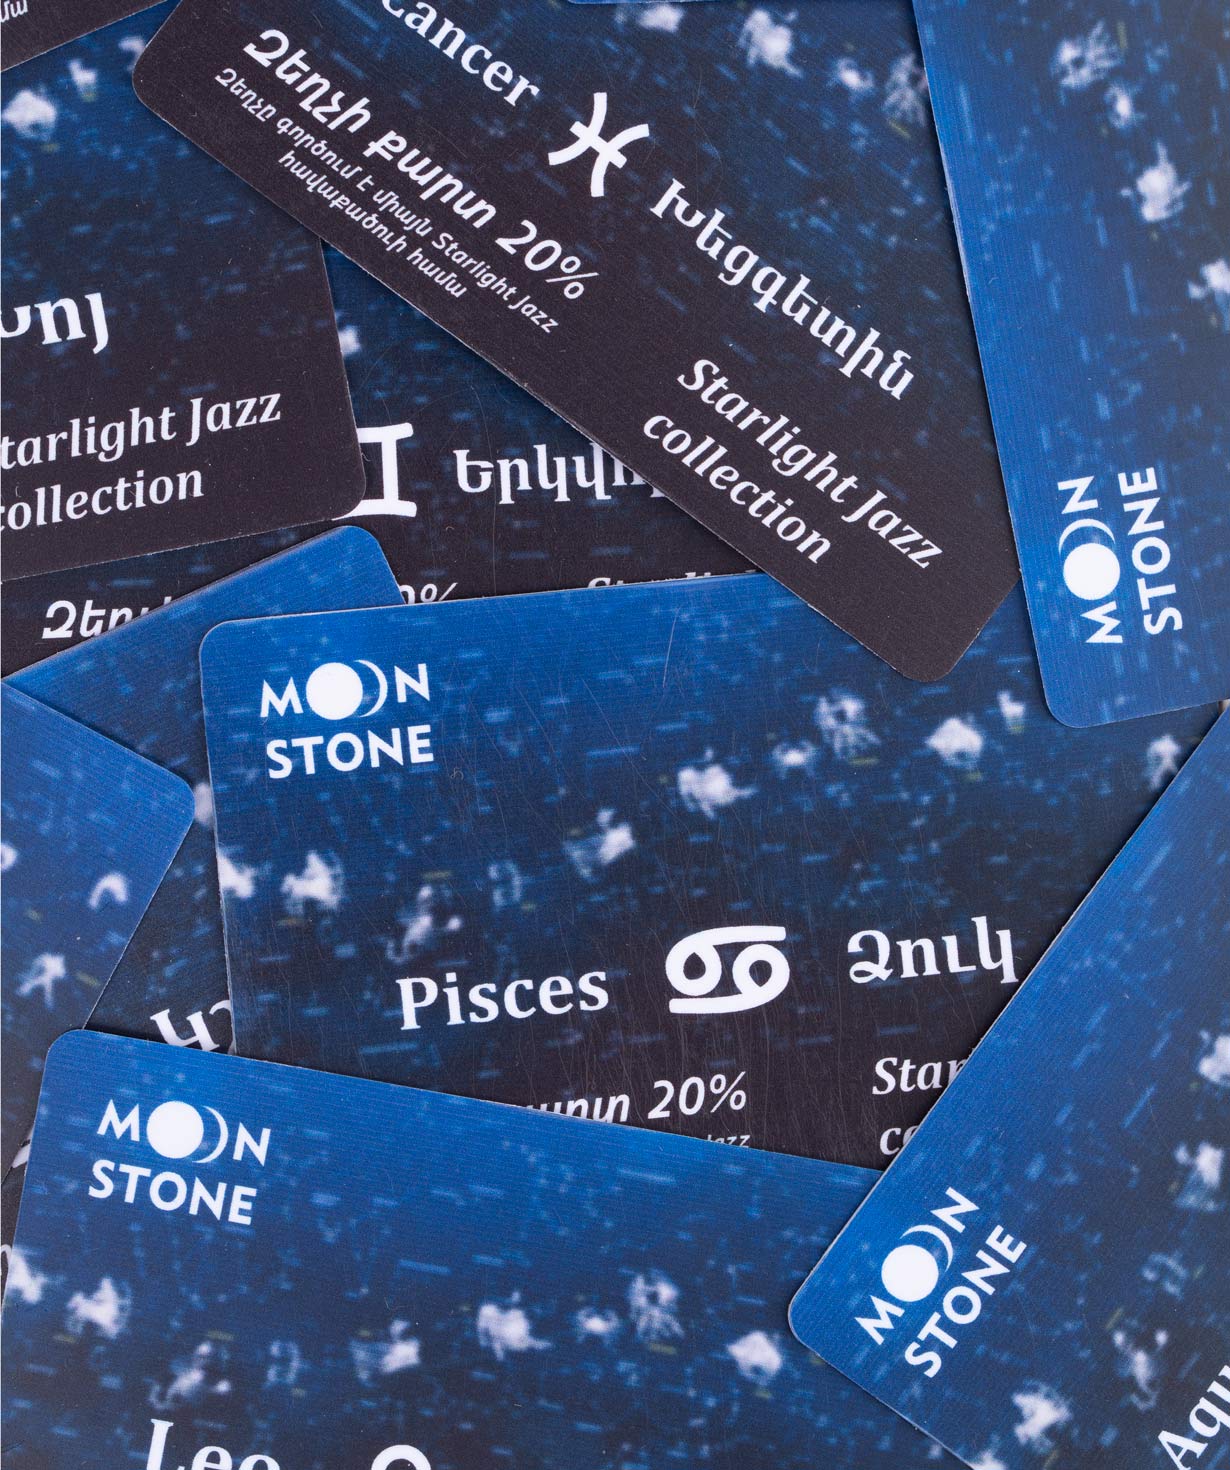 Rhodium Plated Silver Pendant CapricornStarlight Jazz Collection